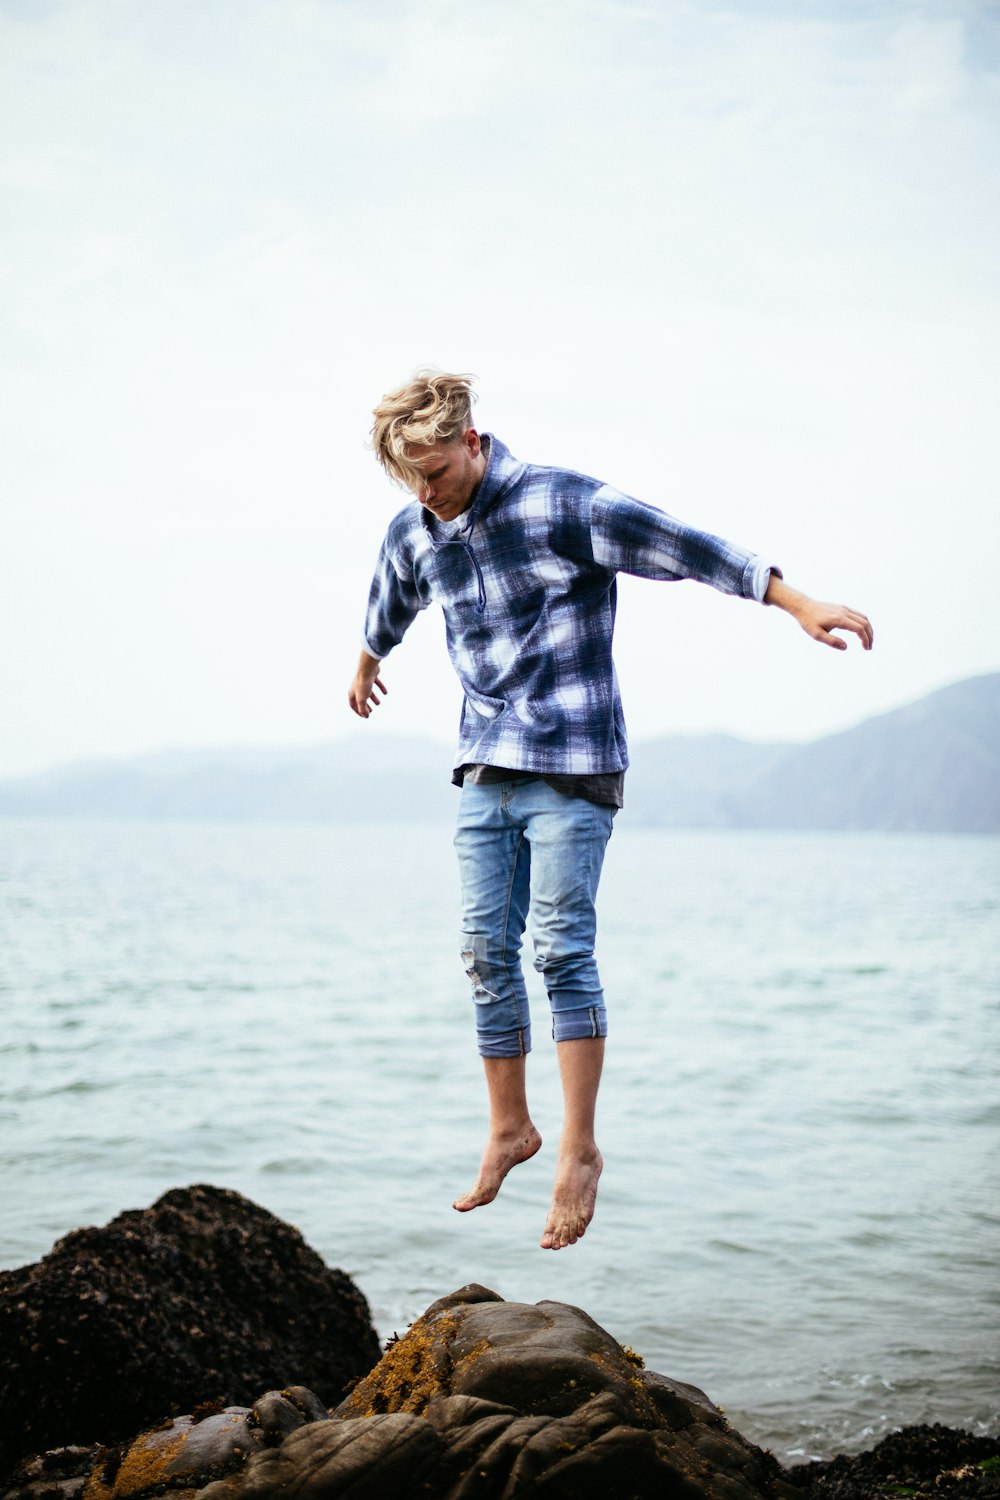 man jumping on rock near body of water